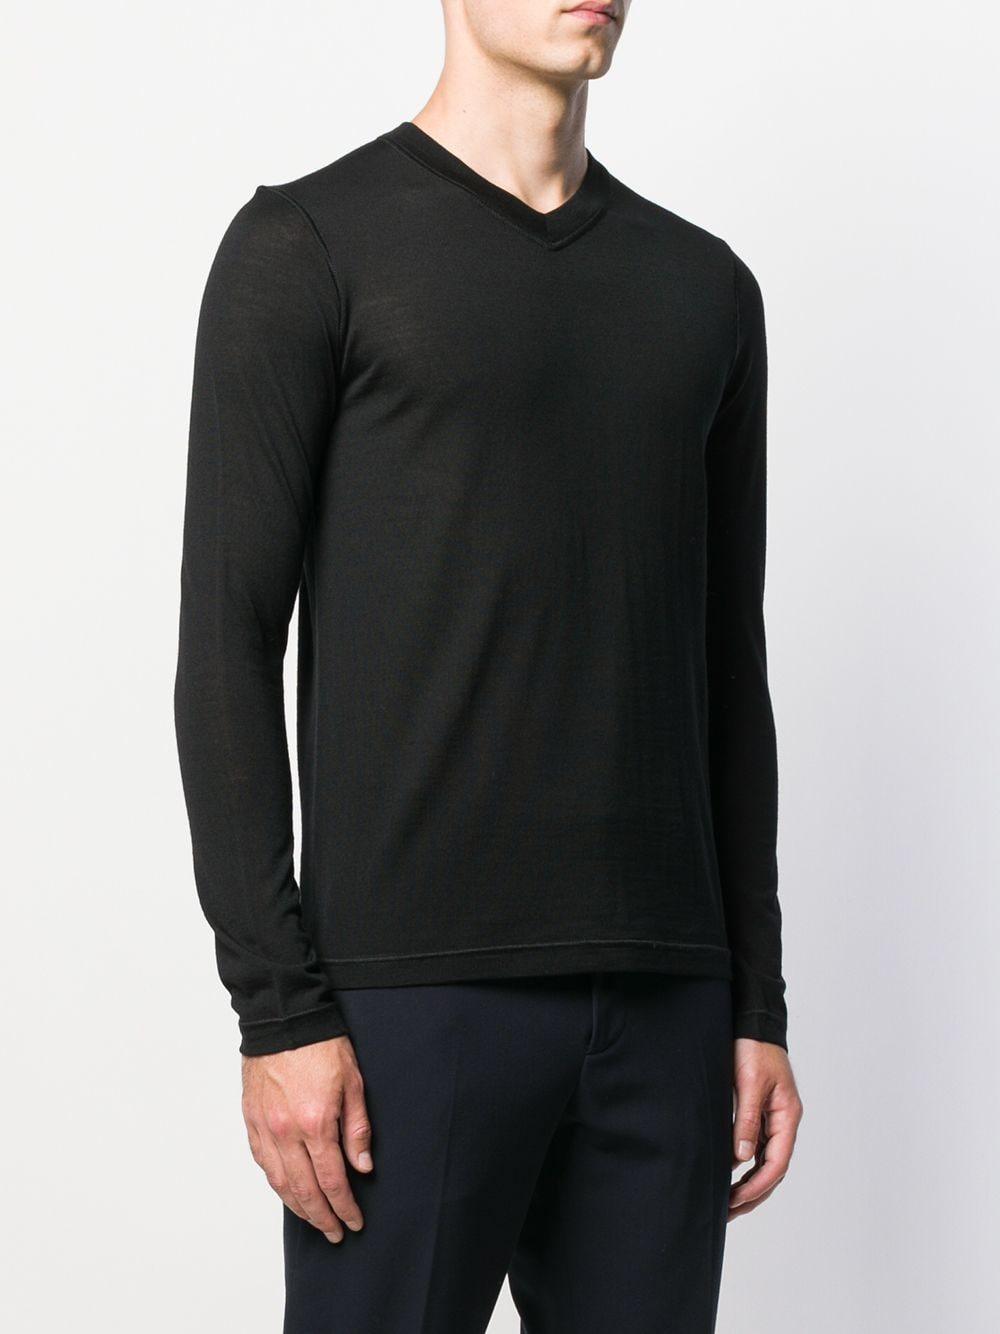 Jil Sander Wool Long-sleeve Fitted Sweater in Black for Men - Lyst